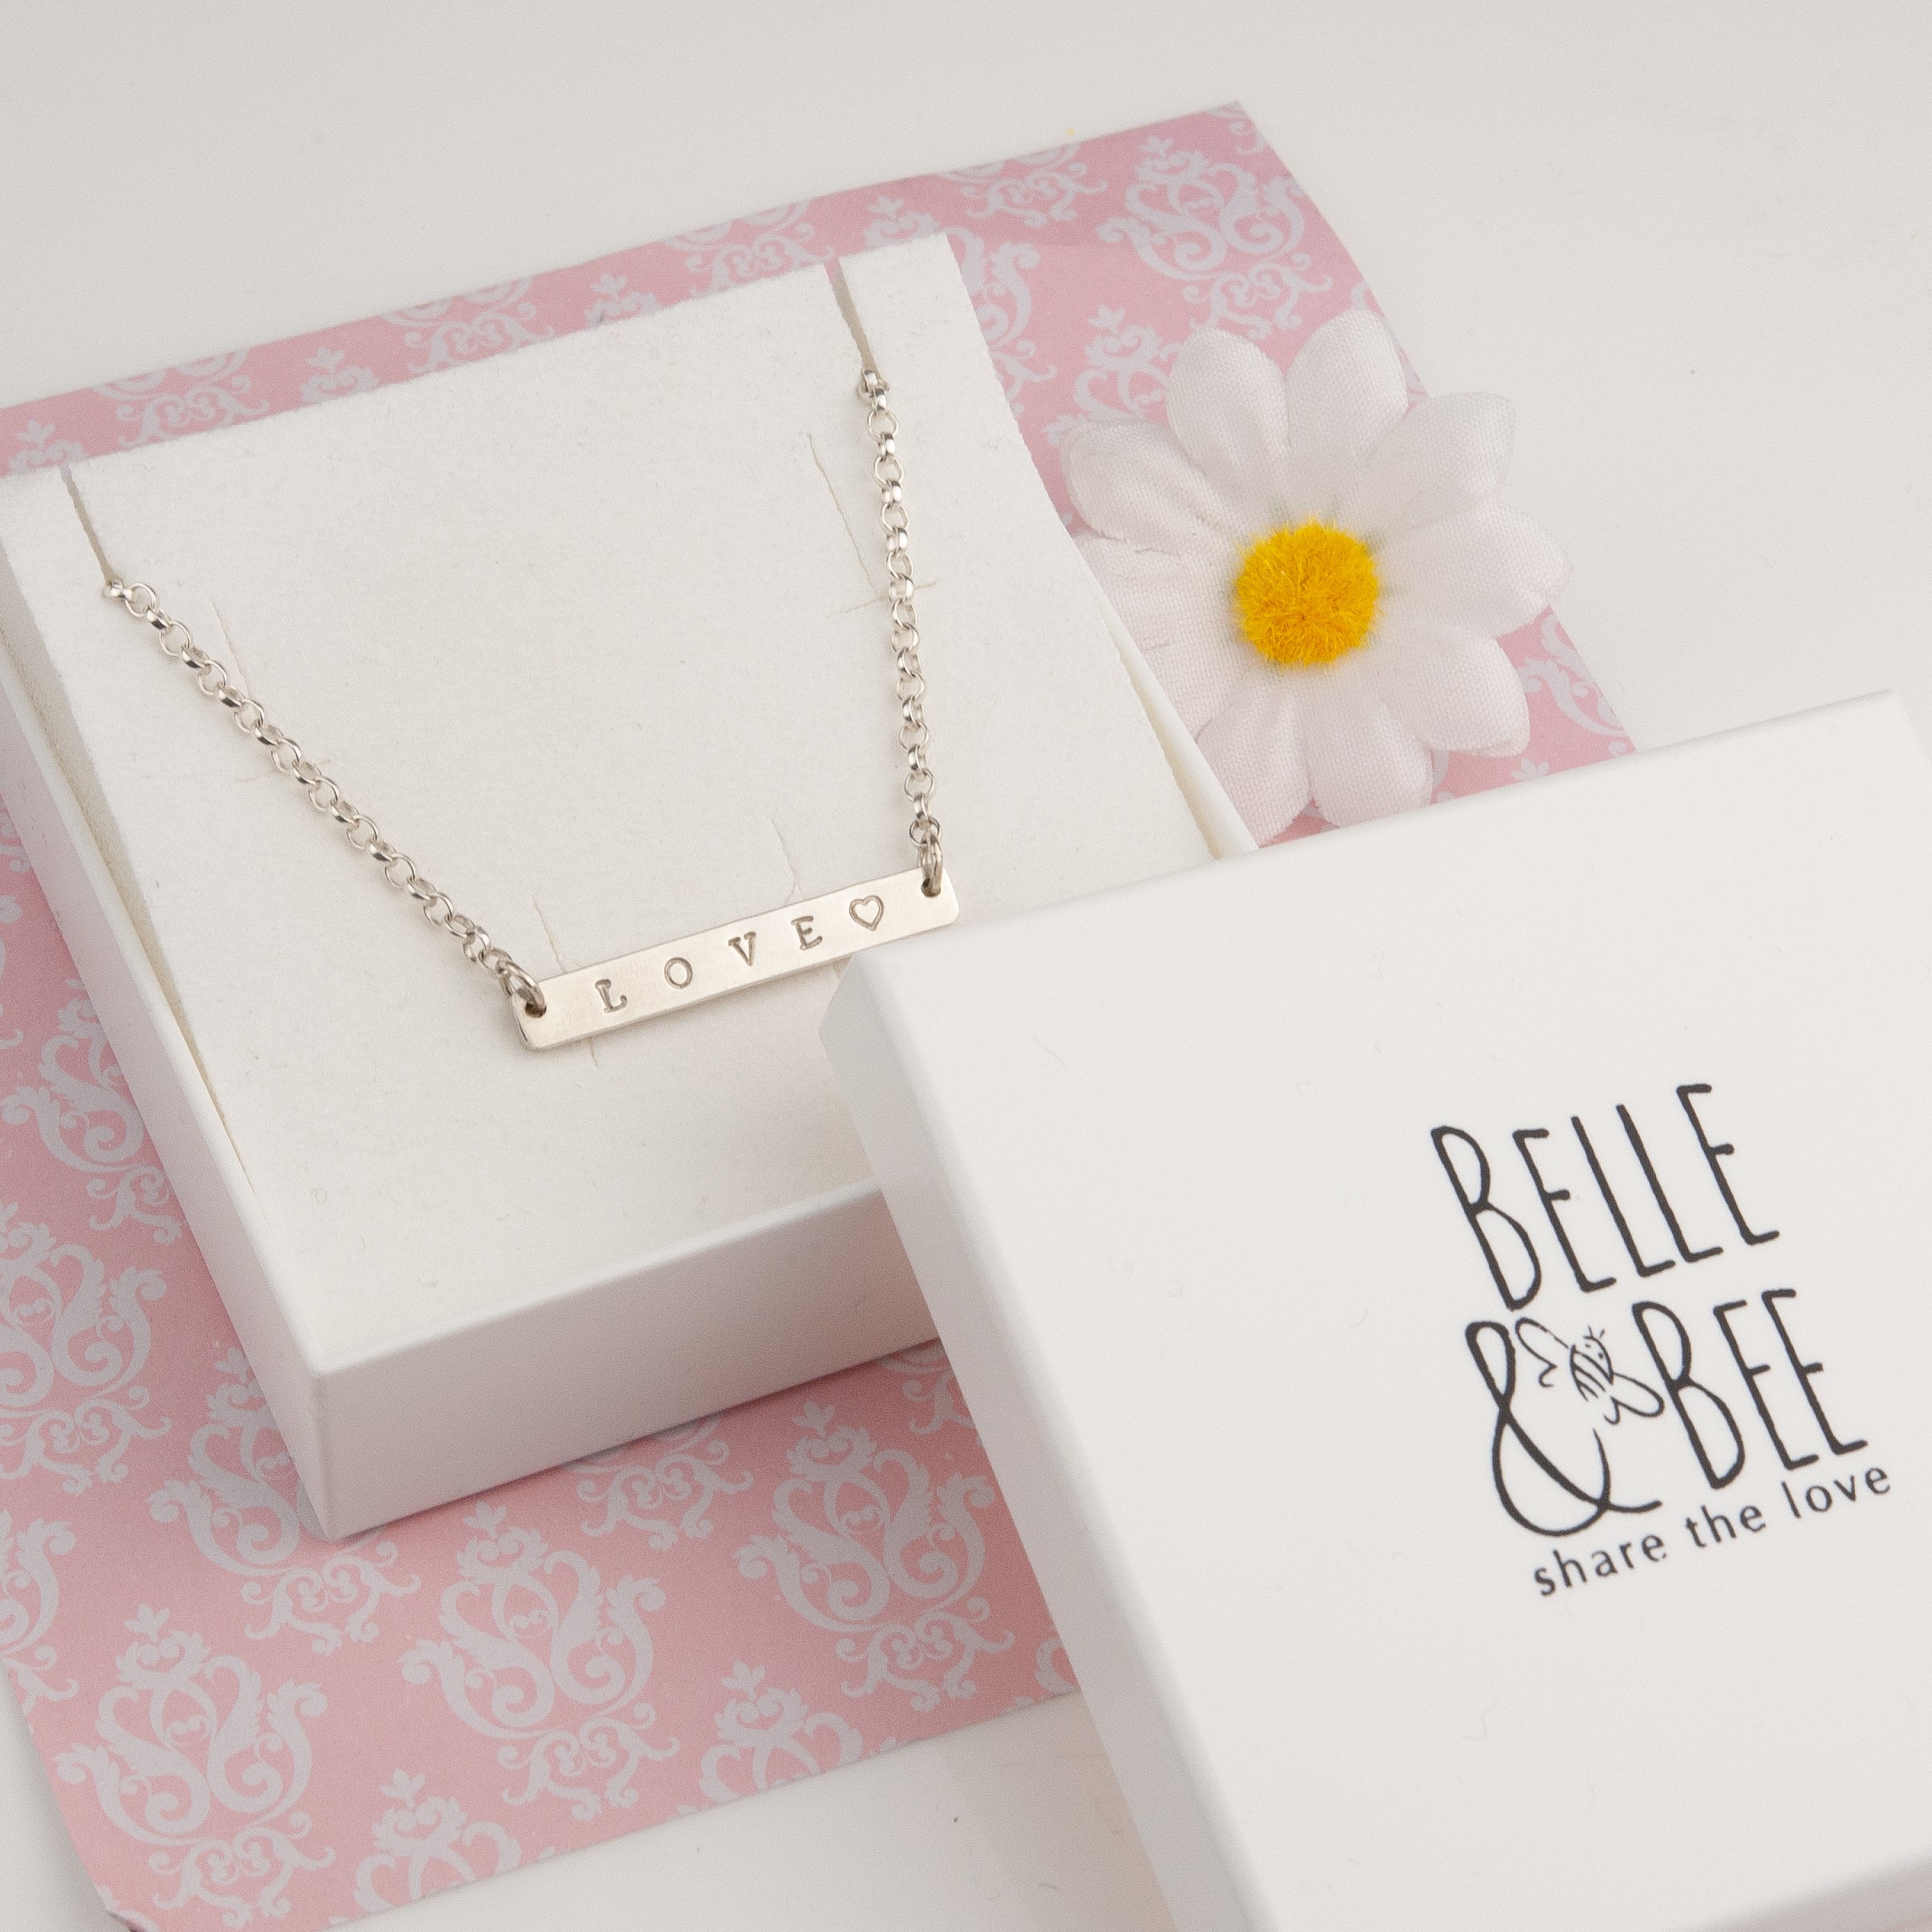 Belle & Bee bar necklace